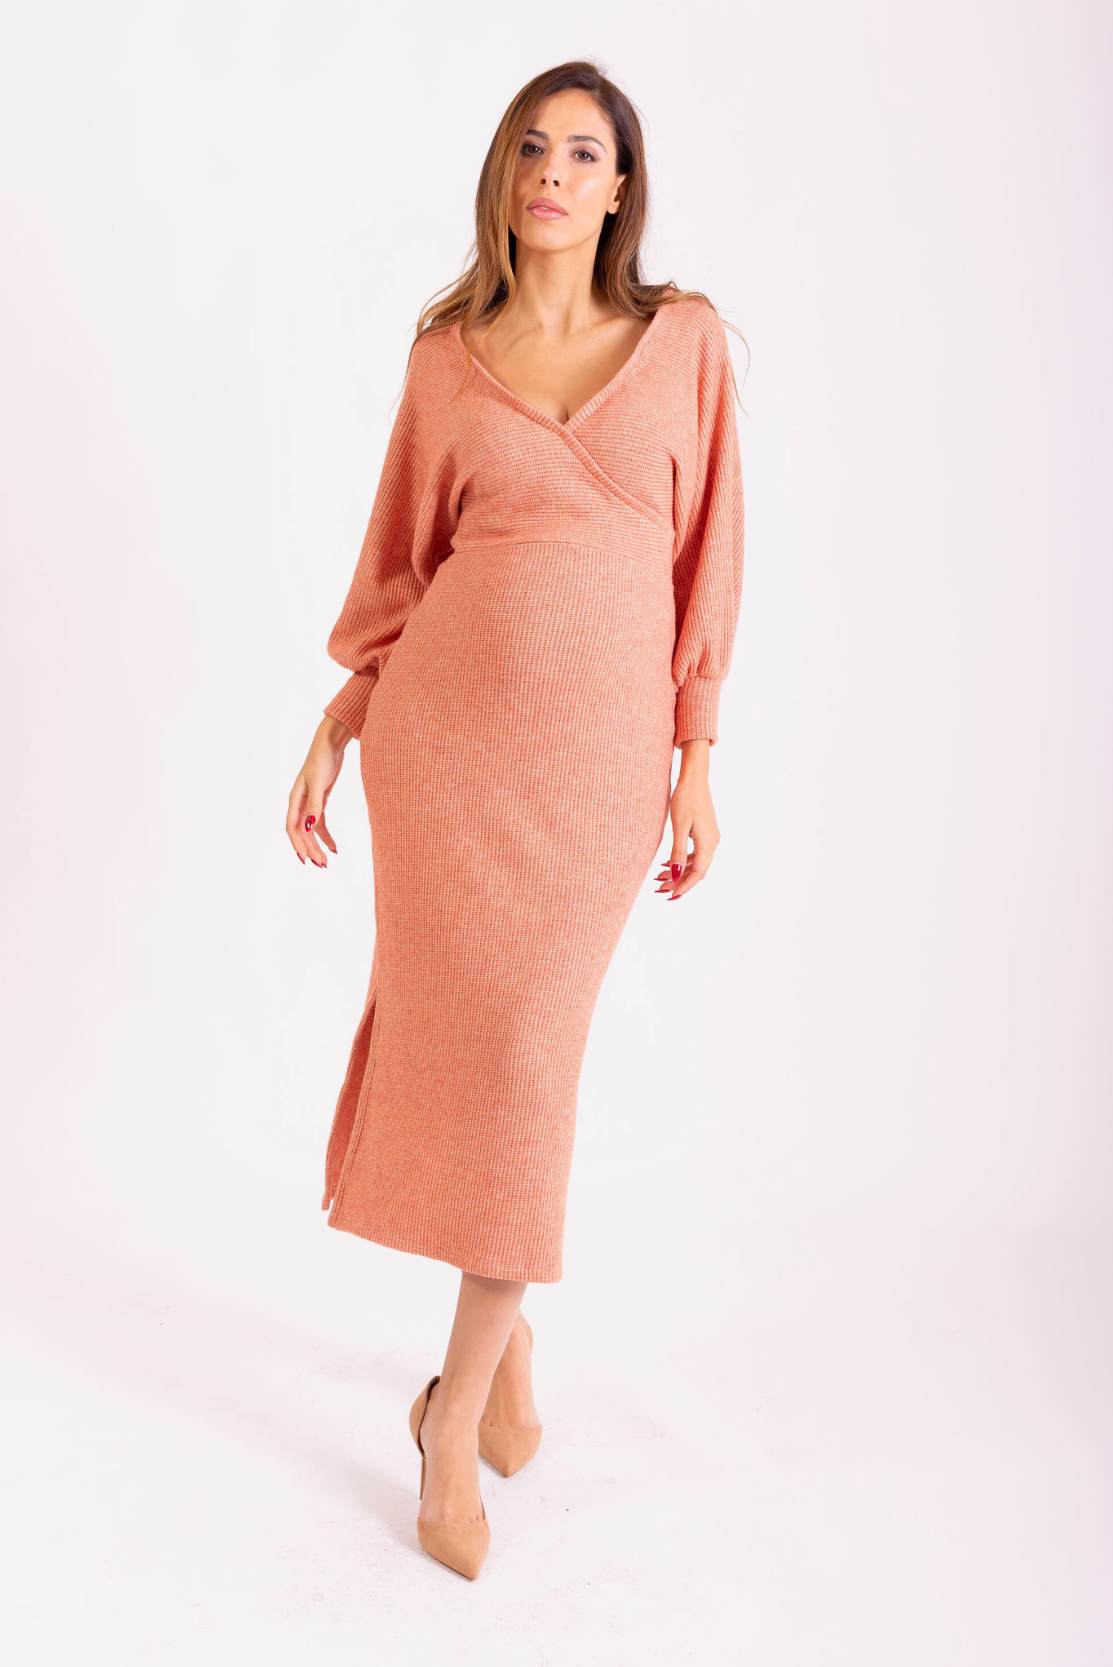 ASOS DESIGN Maternity Nursing fine knit ribbed dress, ASOS